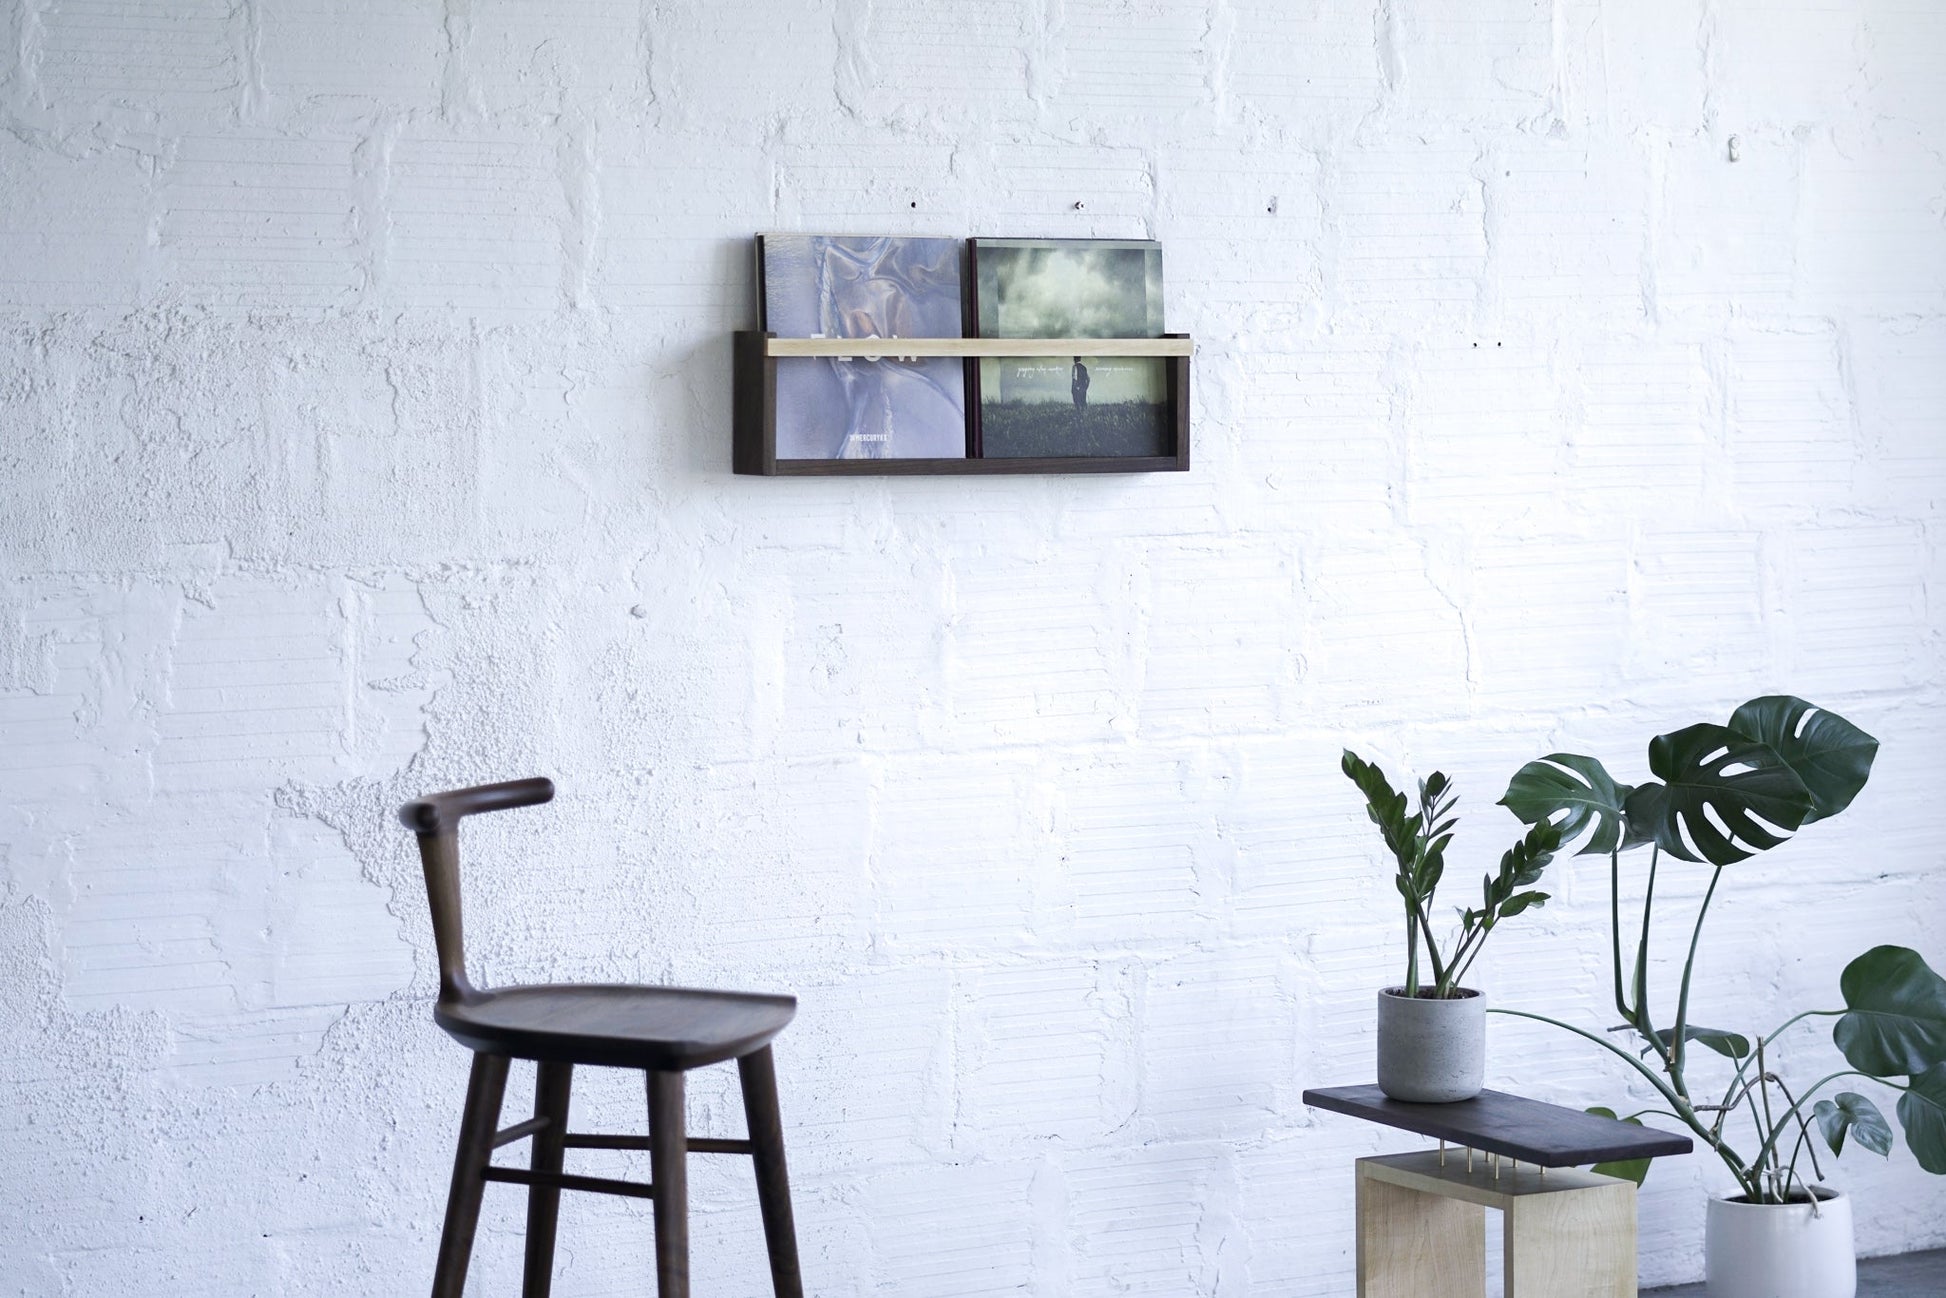 Agrega un toque de elegancia a tu hogar con este estante moderno y versátil - Kaimok Design